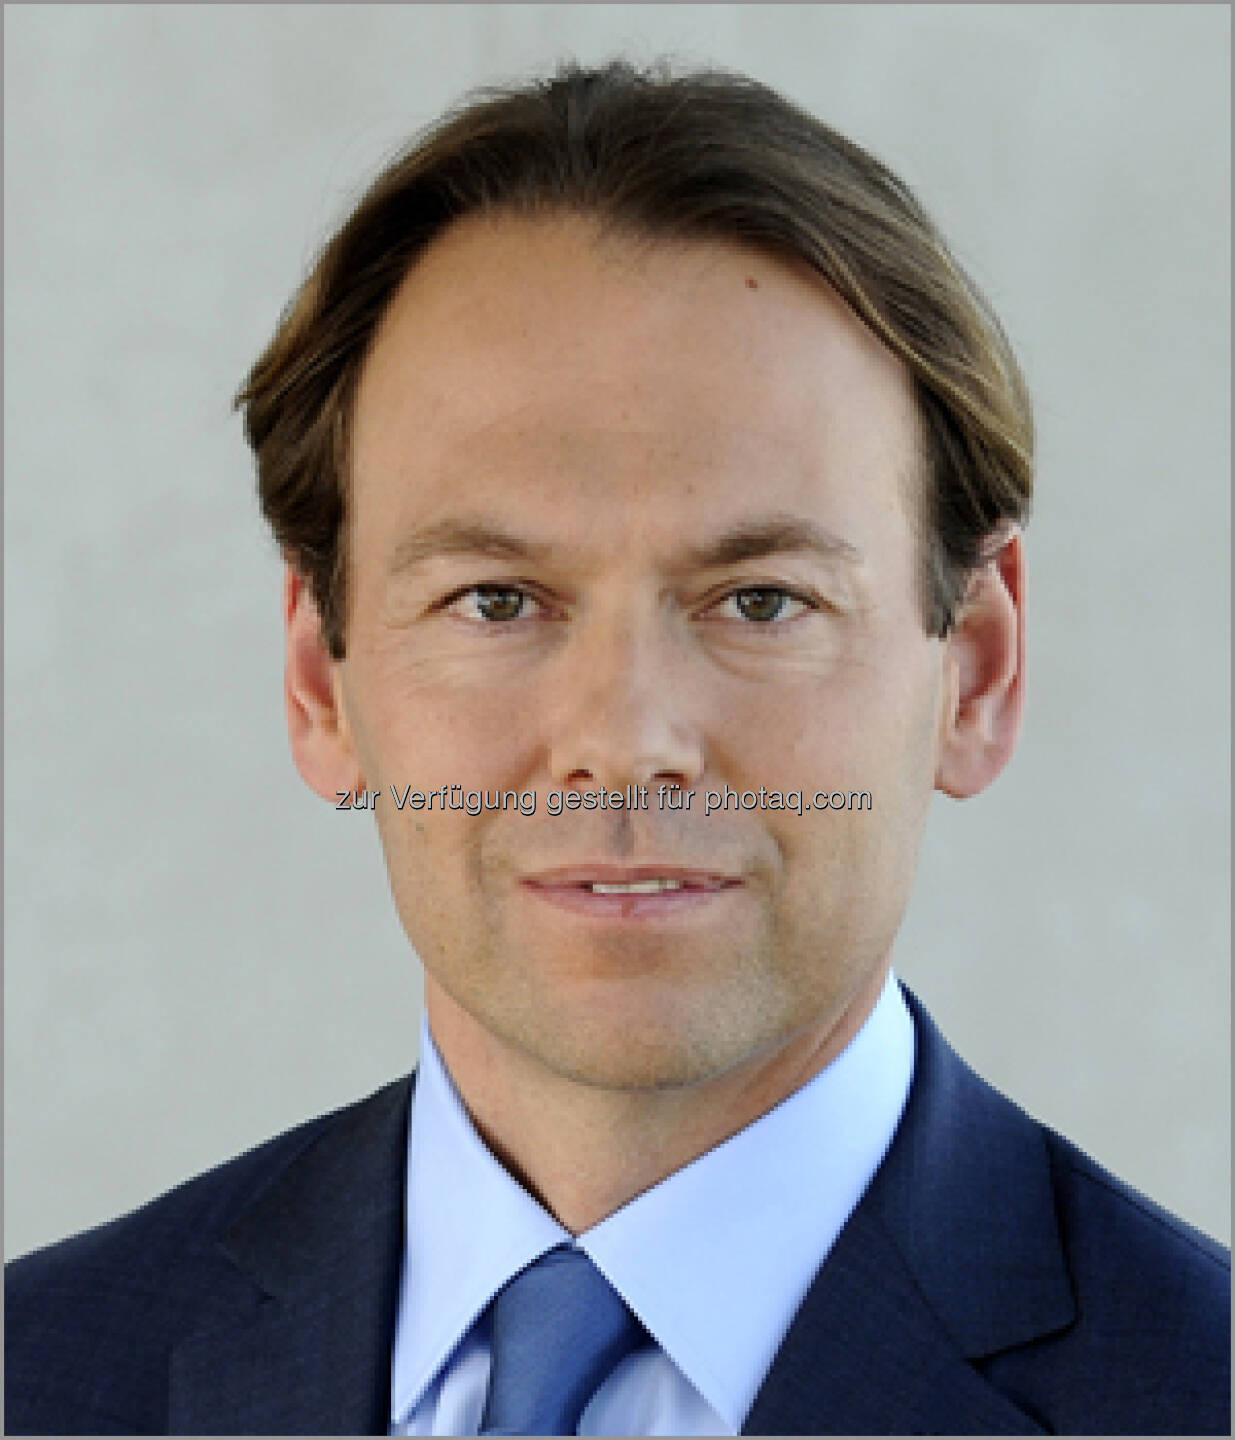 Andreas Brandstetter, CEO Uniqa (23. Juni) - finanzmarktfoto.at wünscht alles Gute!